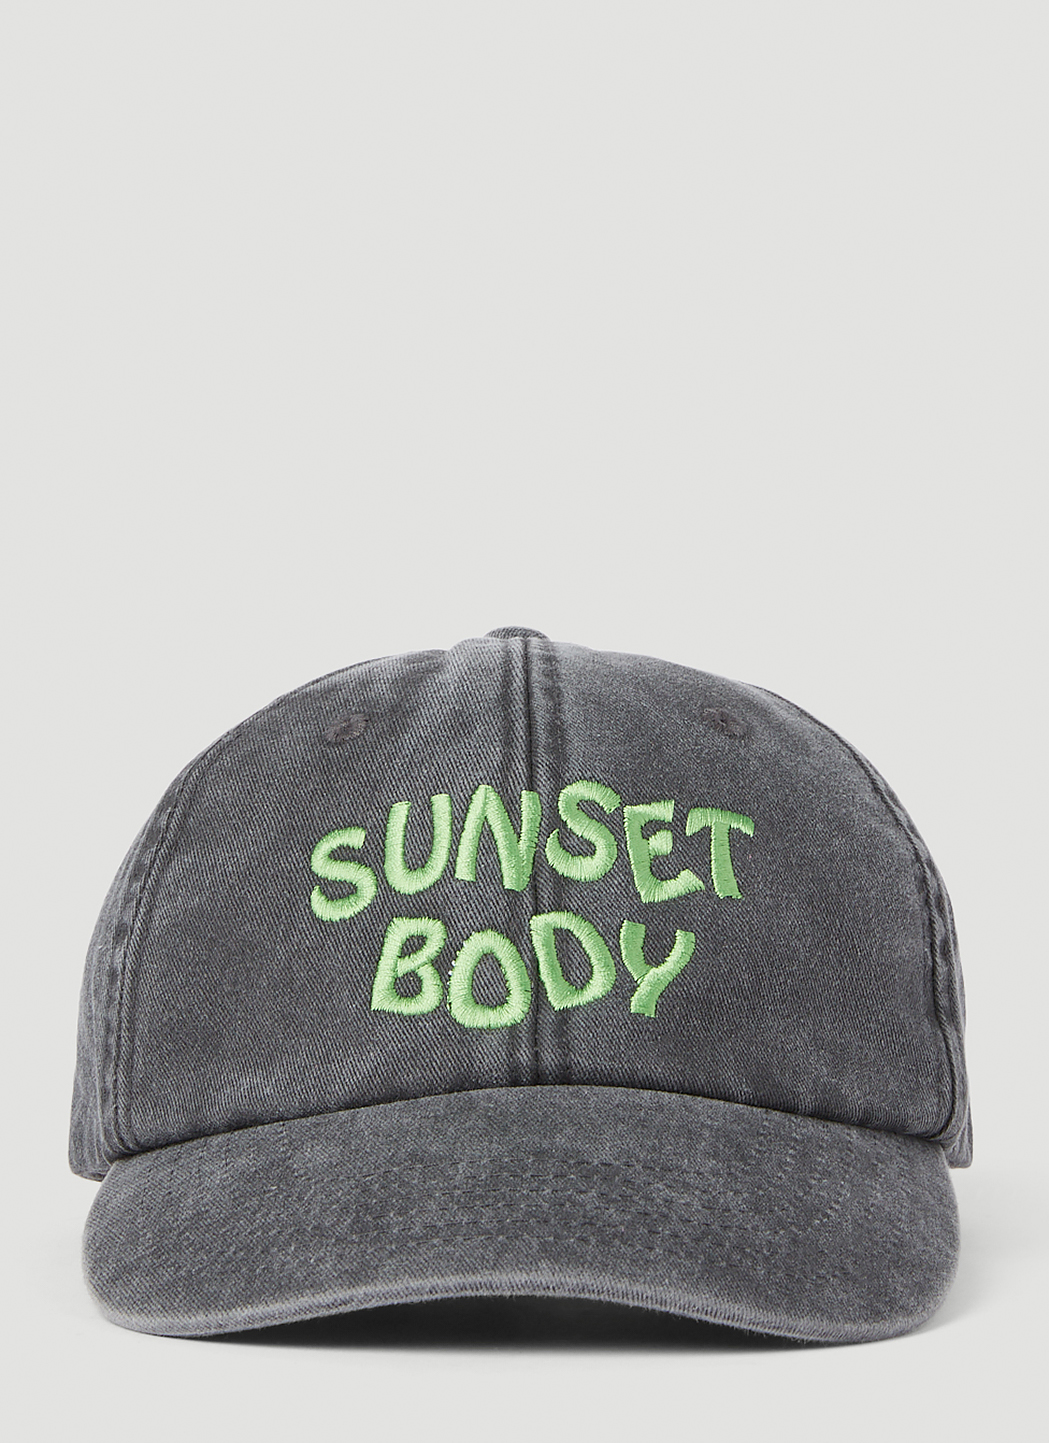 Sunset Body Baseball Cap